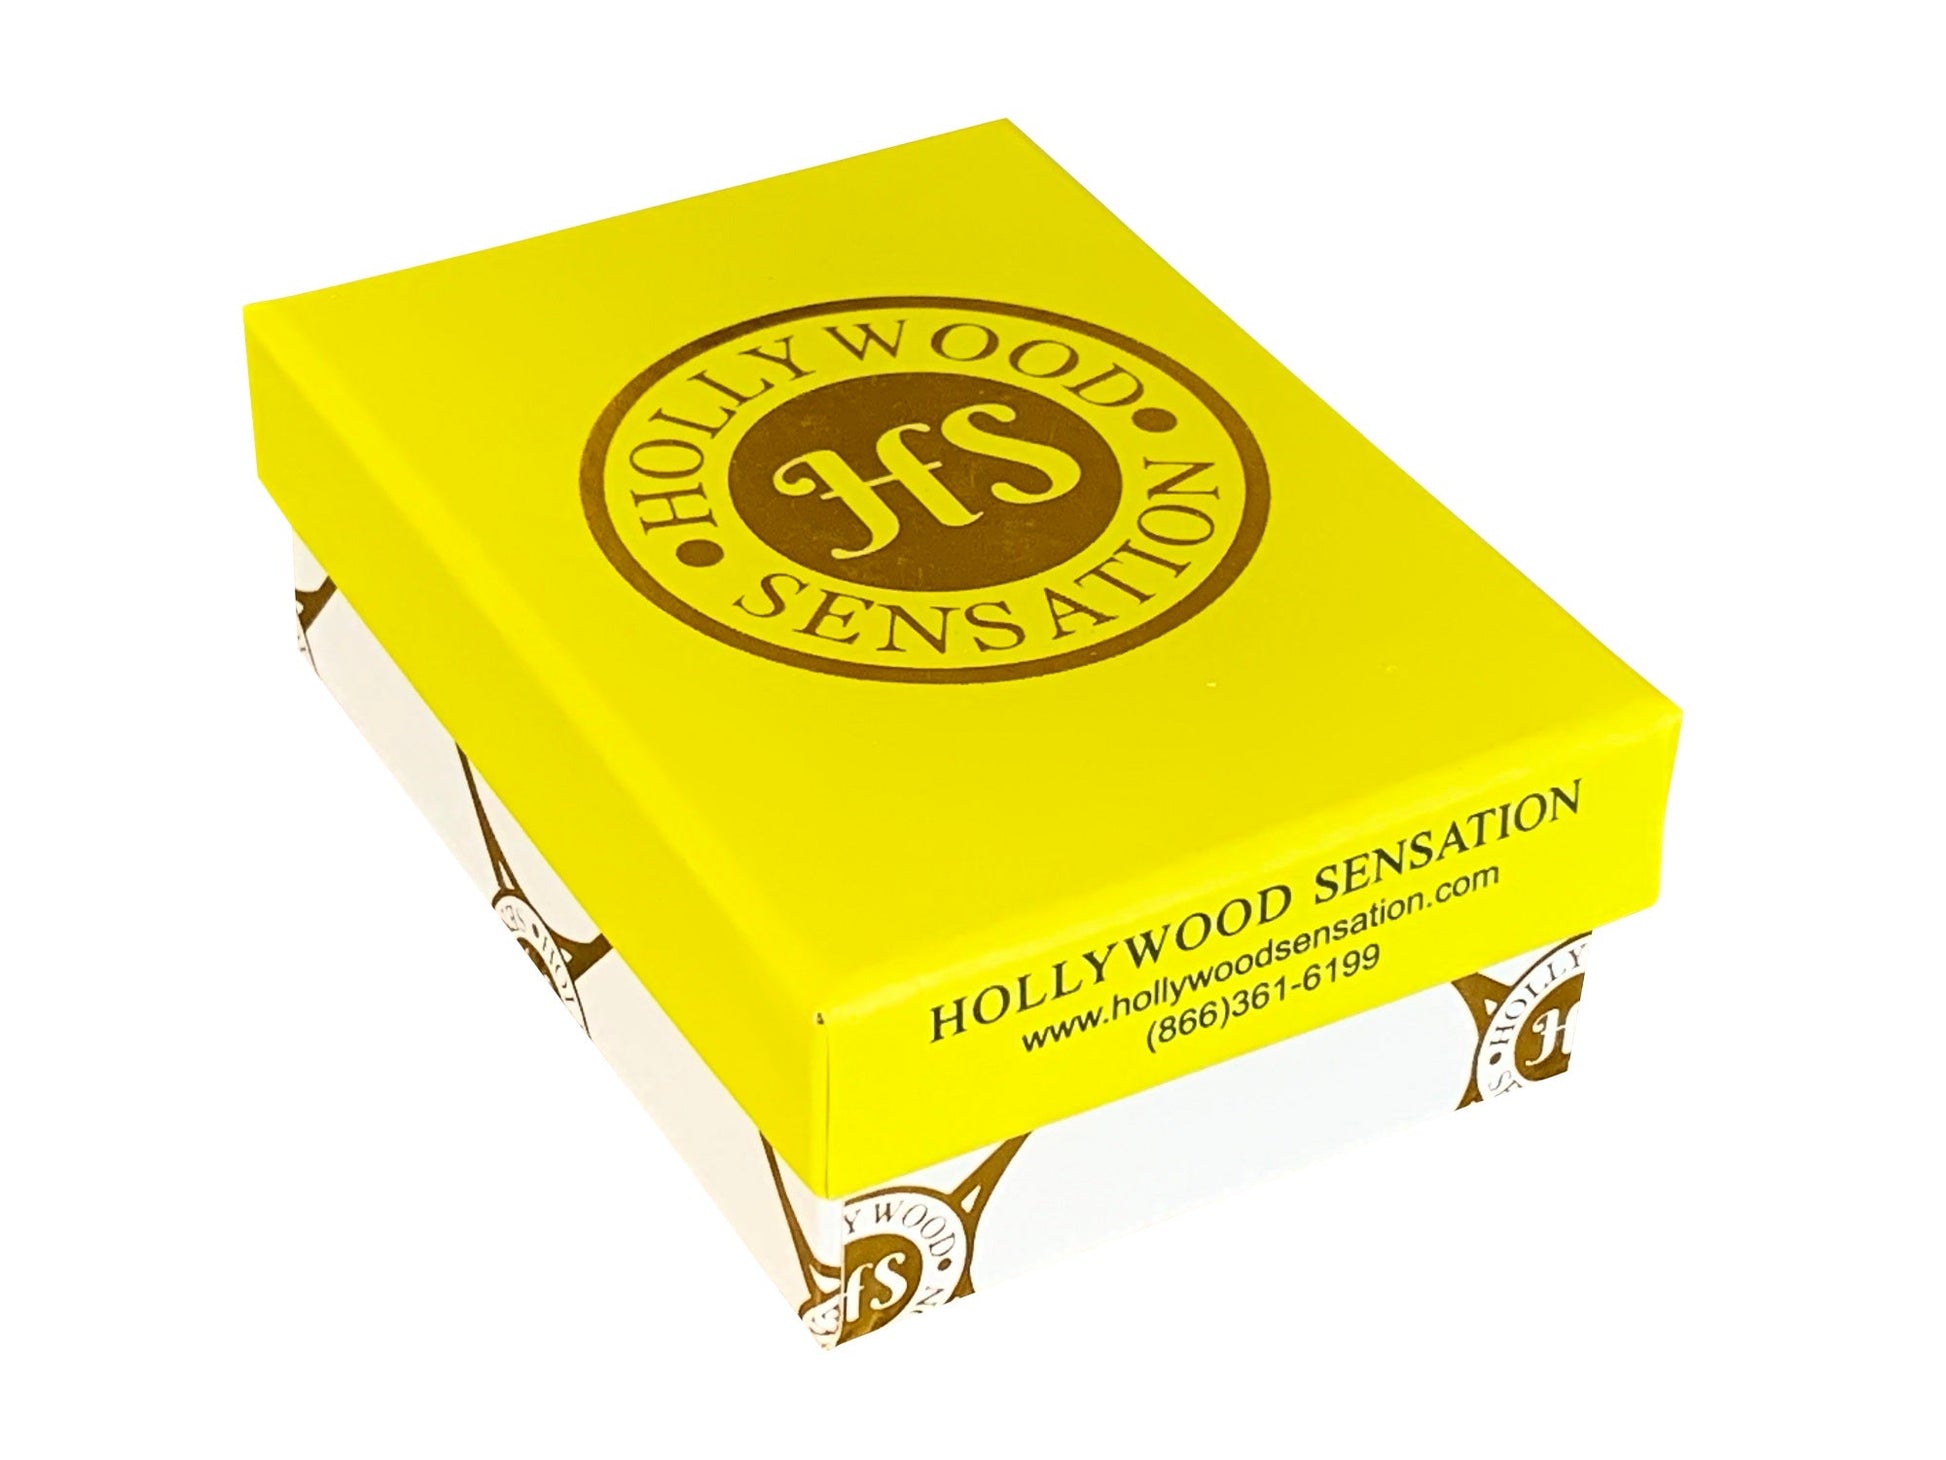 Gold Chandelier Hoop Earrings with Puka Seashells - Hollywood Sensation®